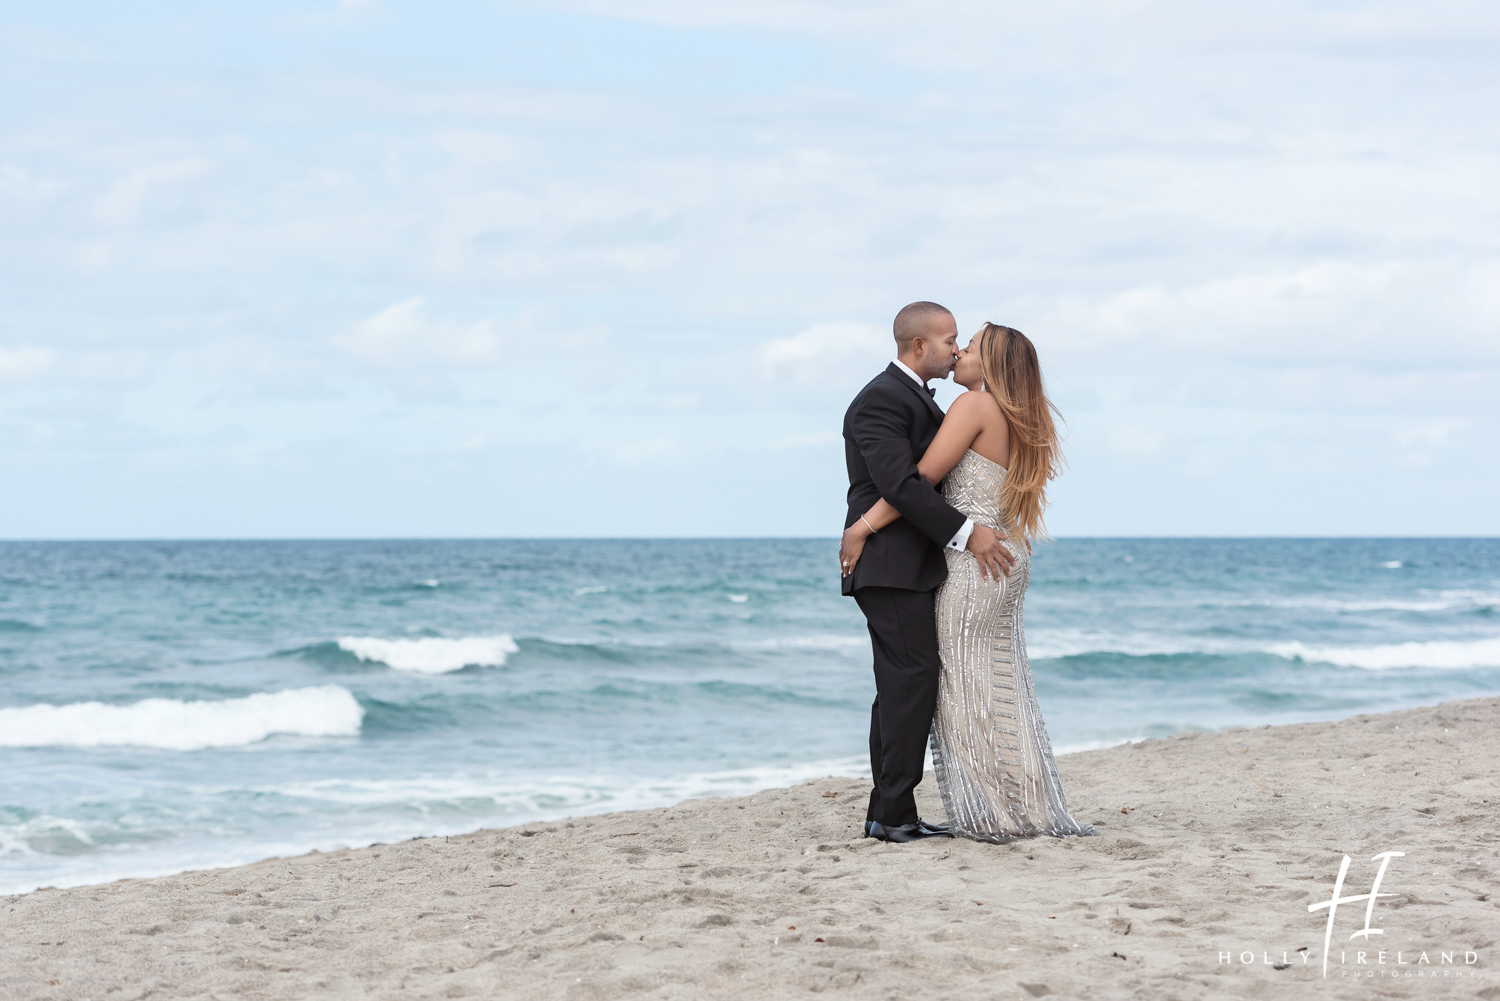 Carlsbad Beach Wedding Photography By Holly Ireland Photography